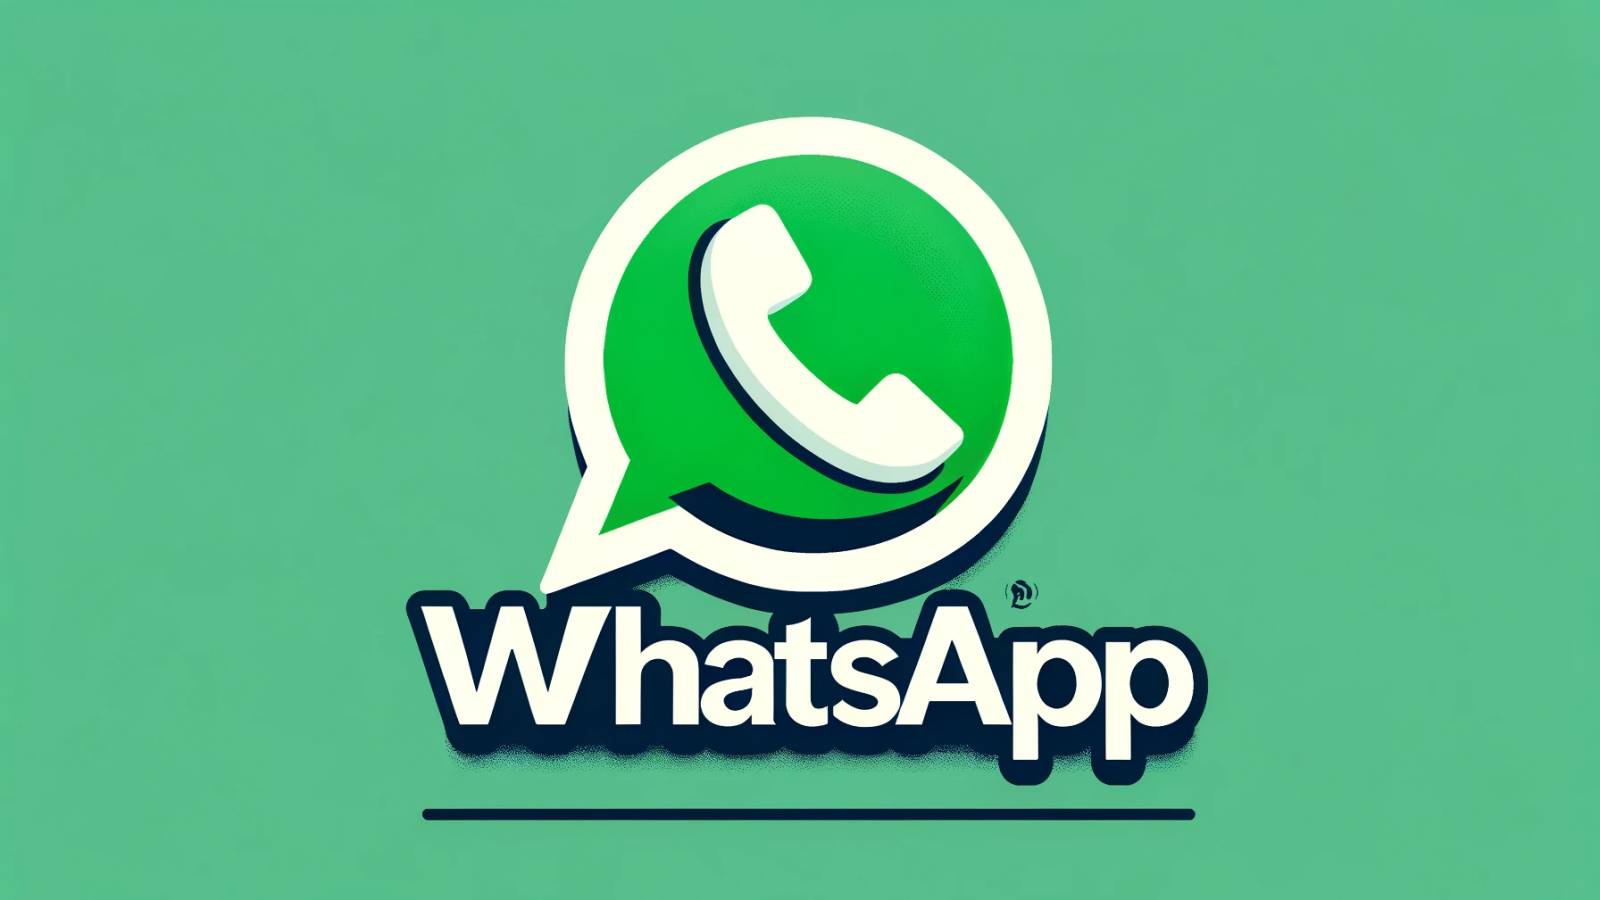 WhatsApp uniformity